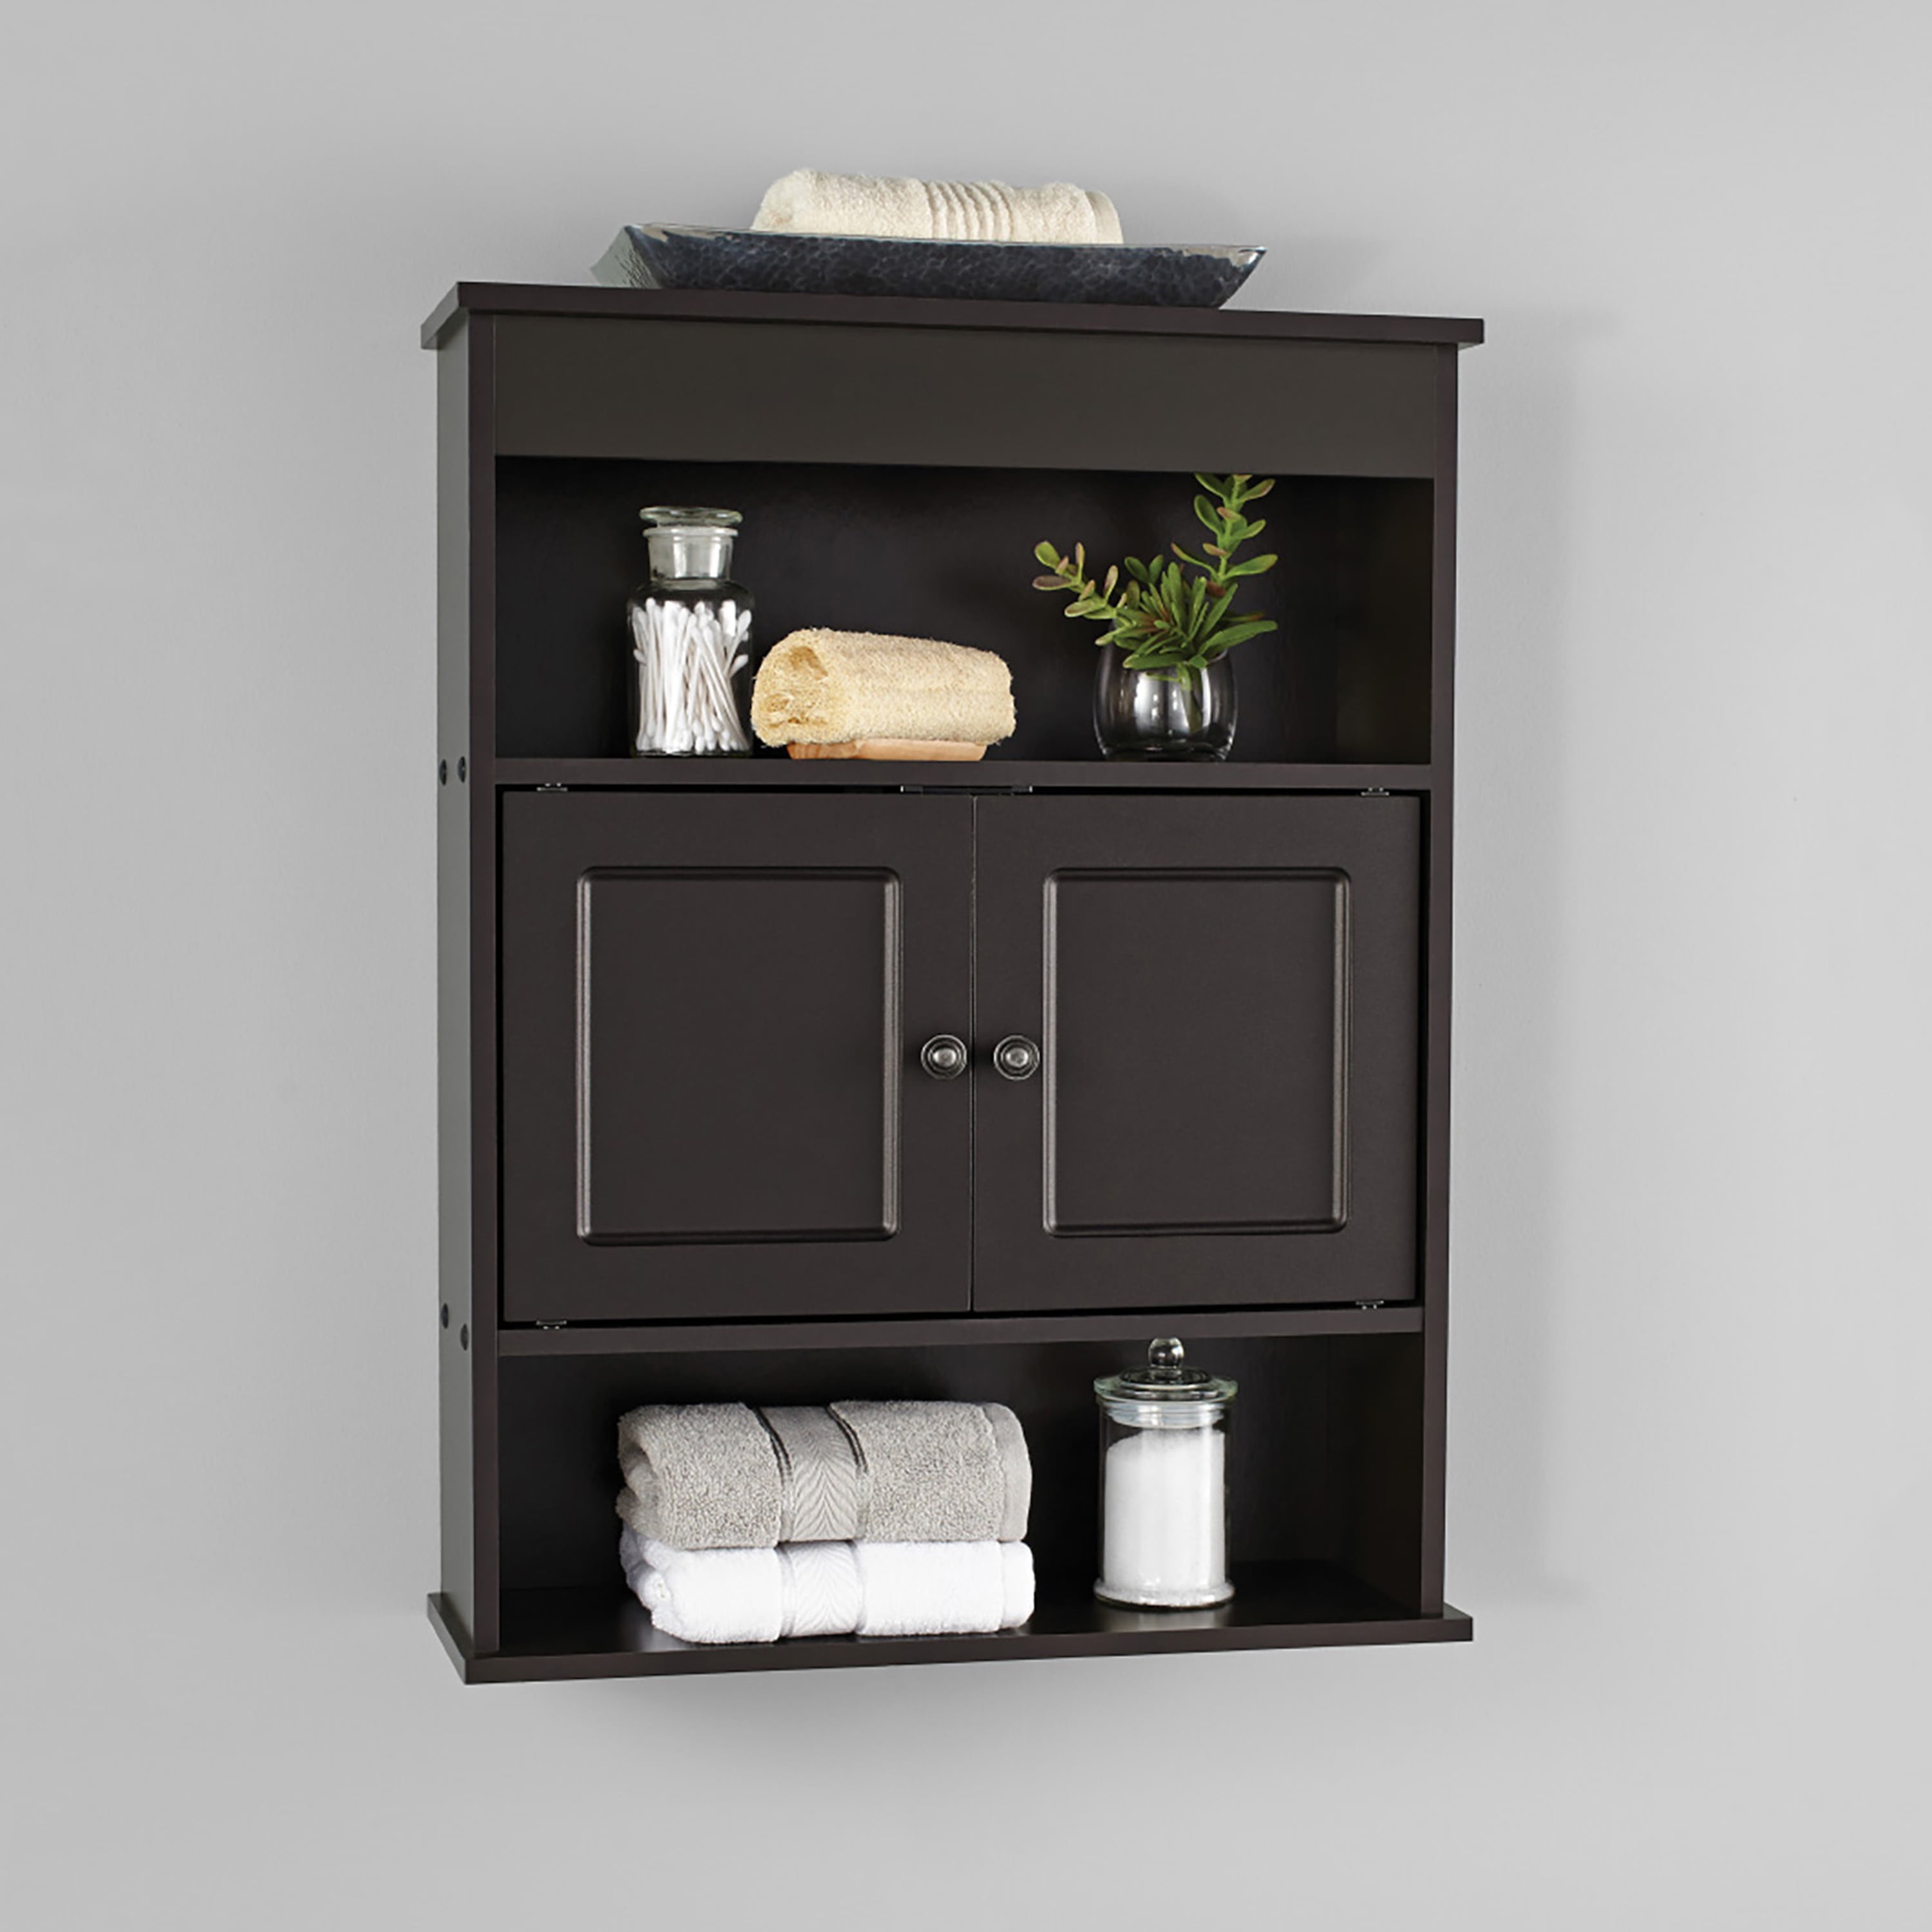 Oak Bathroom Furniture Small Vanity CabinetCupboard with Shelving Storage